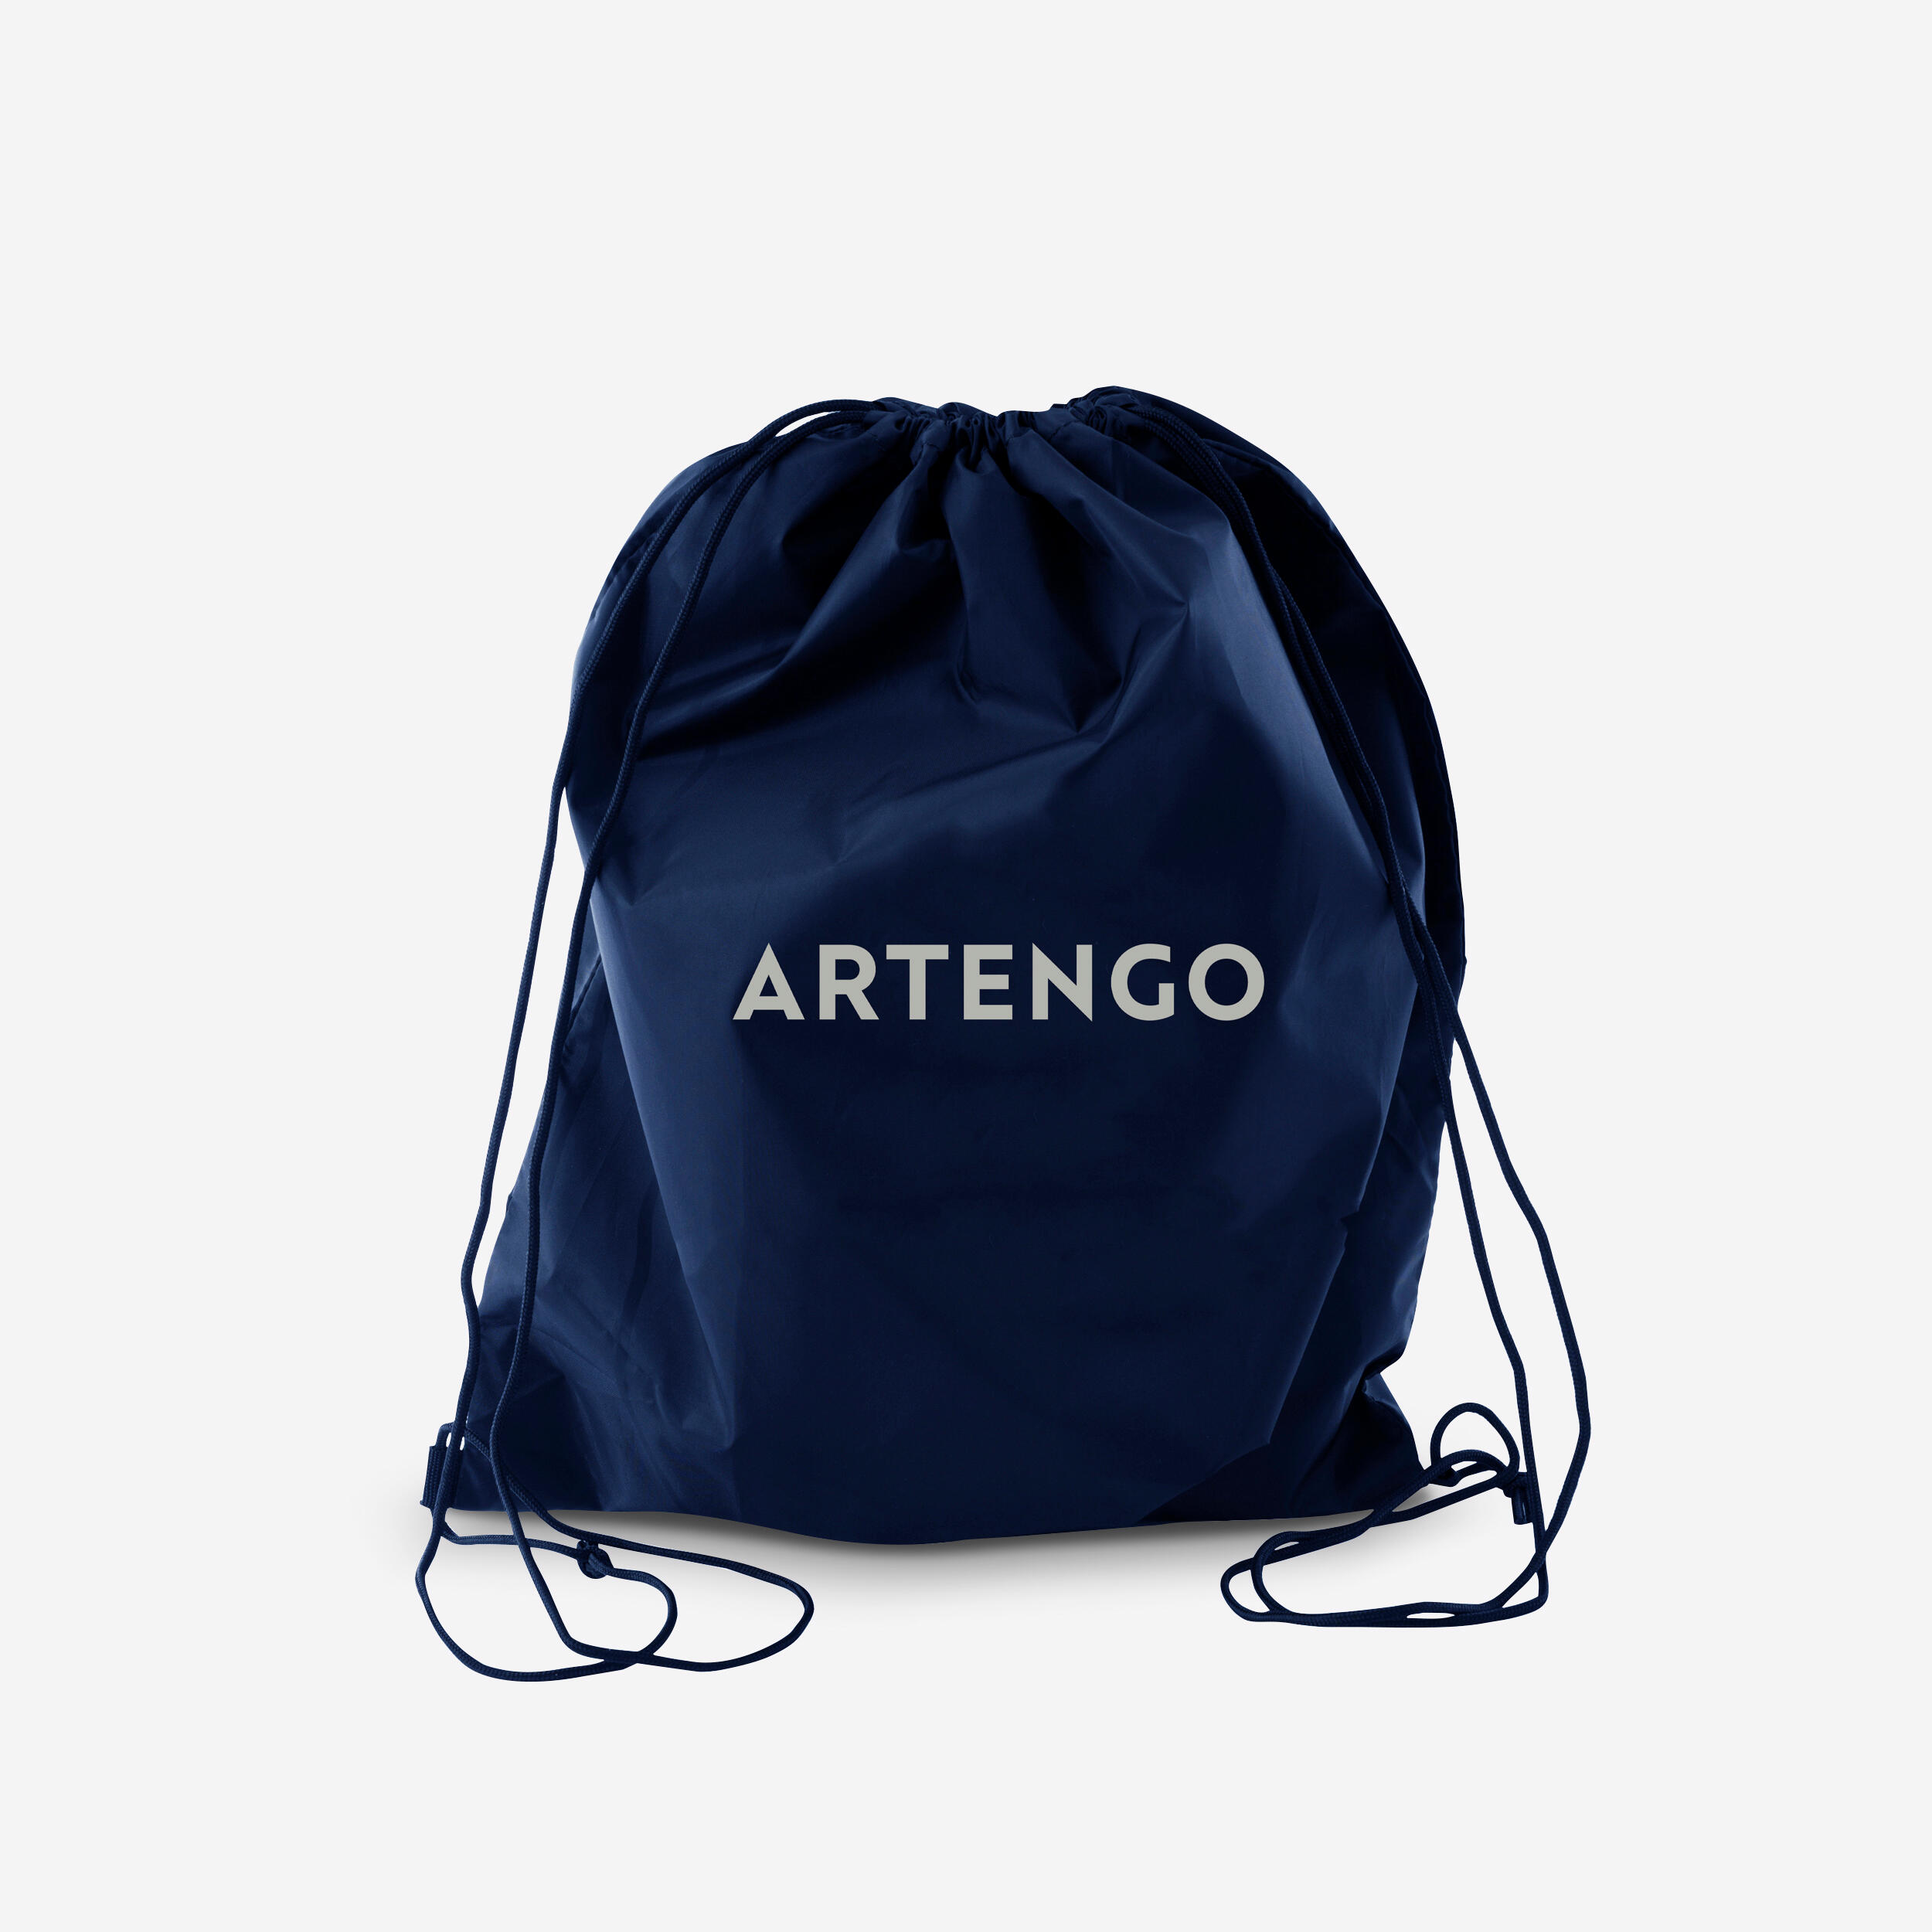 ARTENGO Shoe Bag - Navy Blue